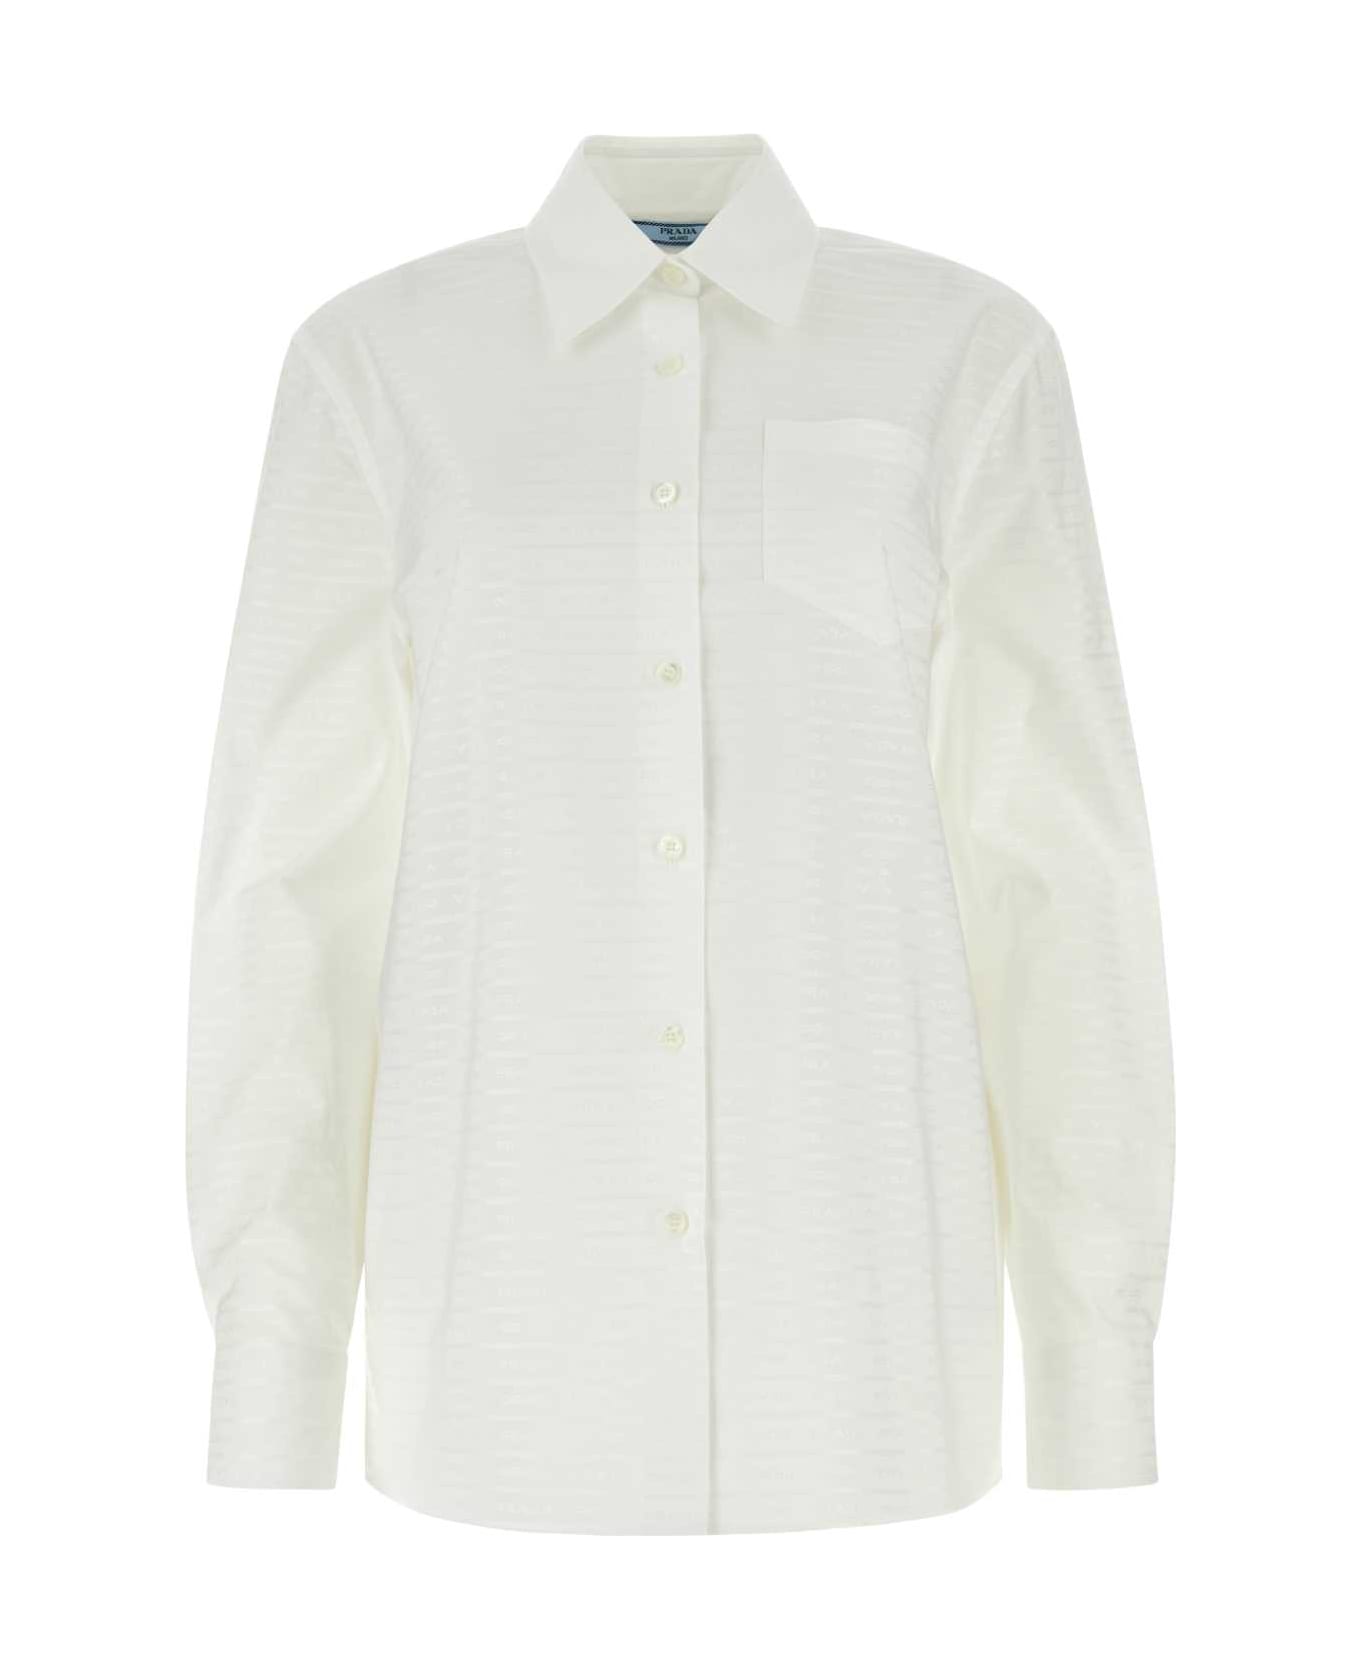 Prada White Cotton Shirt - BIANCO シャツ